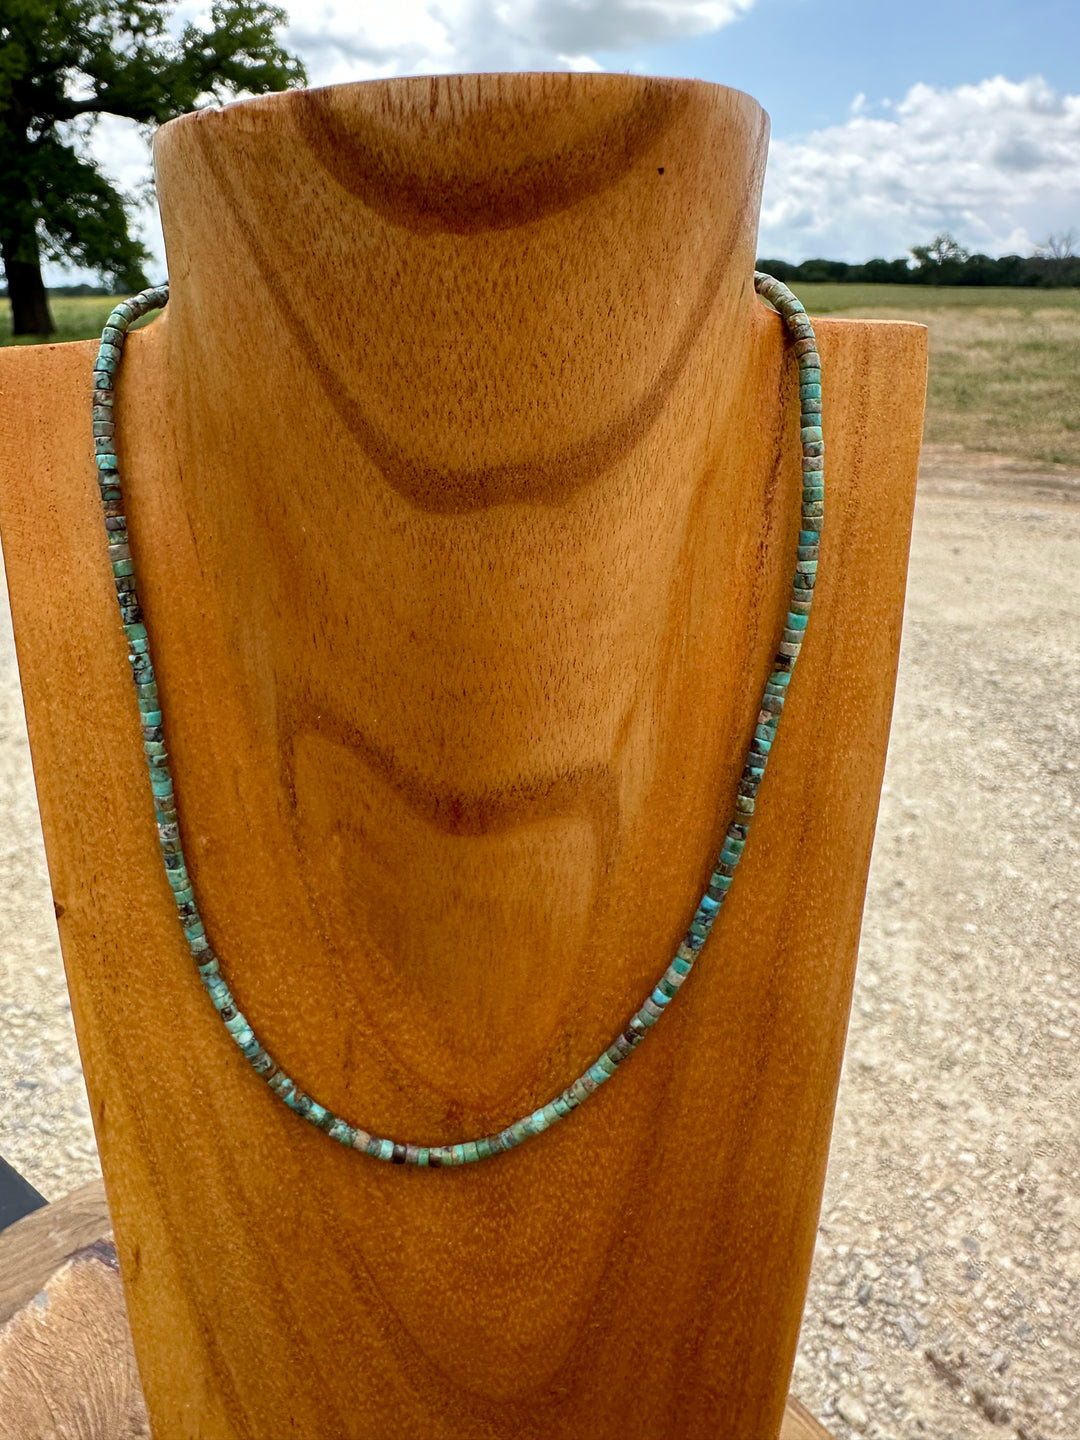 Kingman Turquoise Necklace